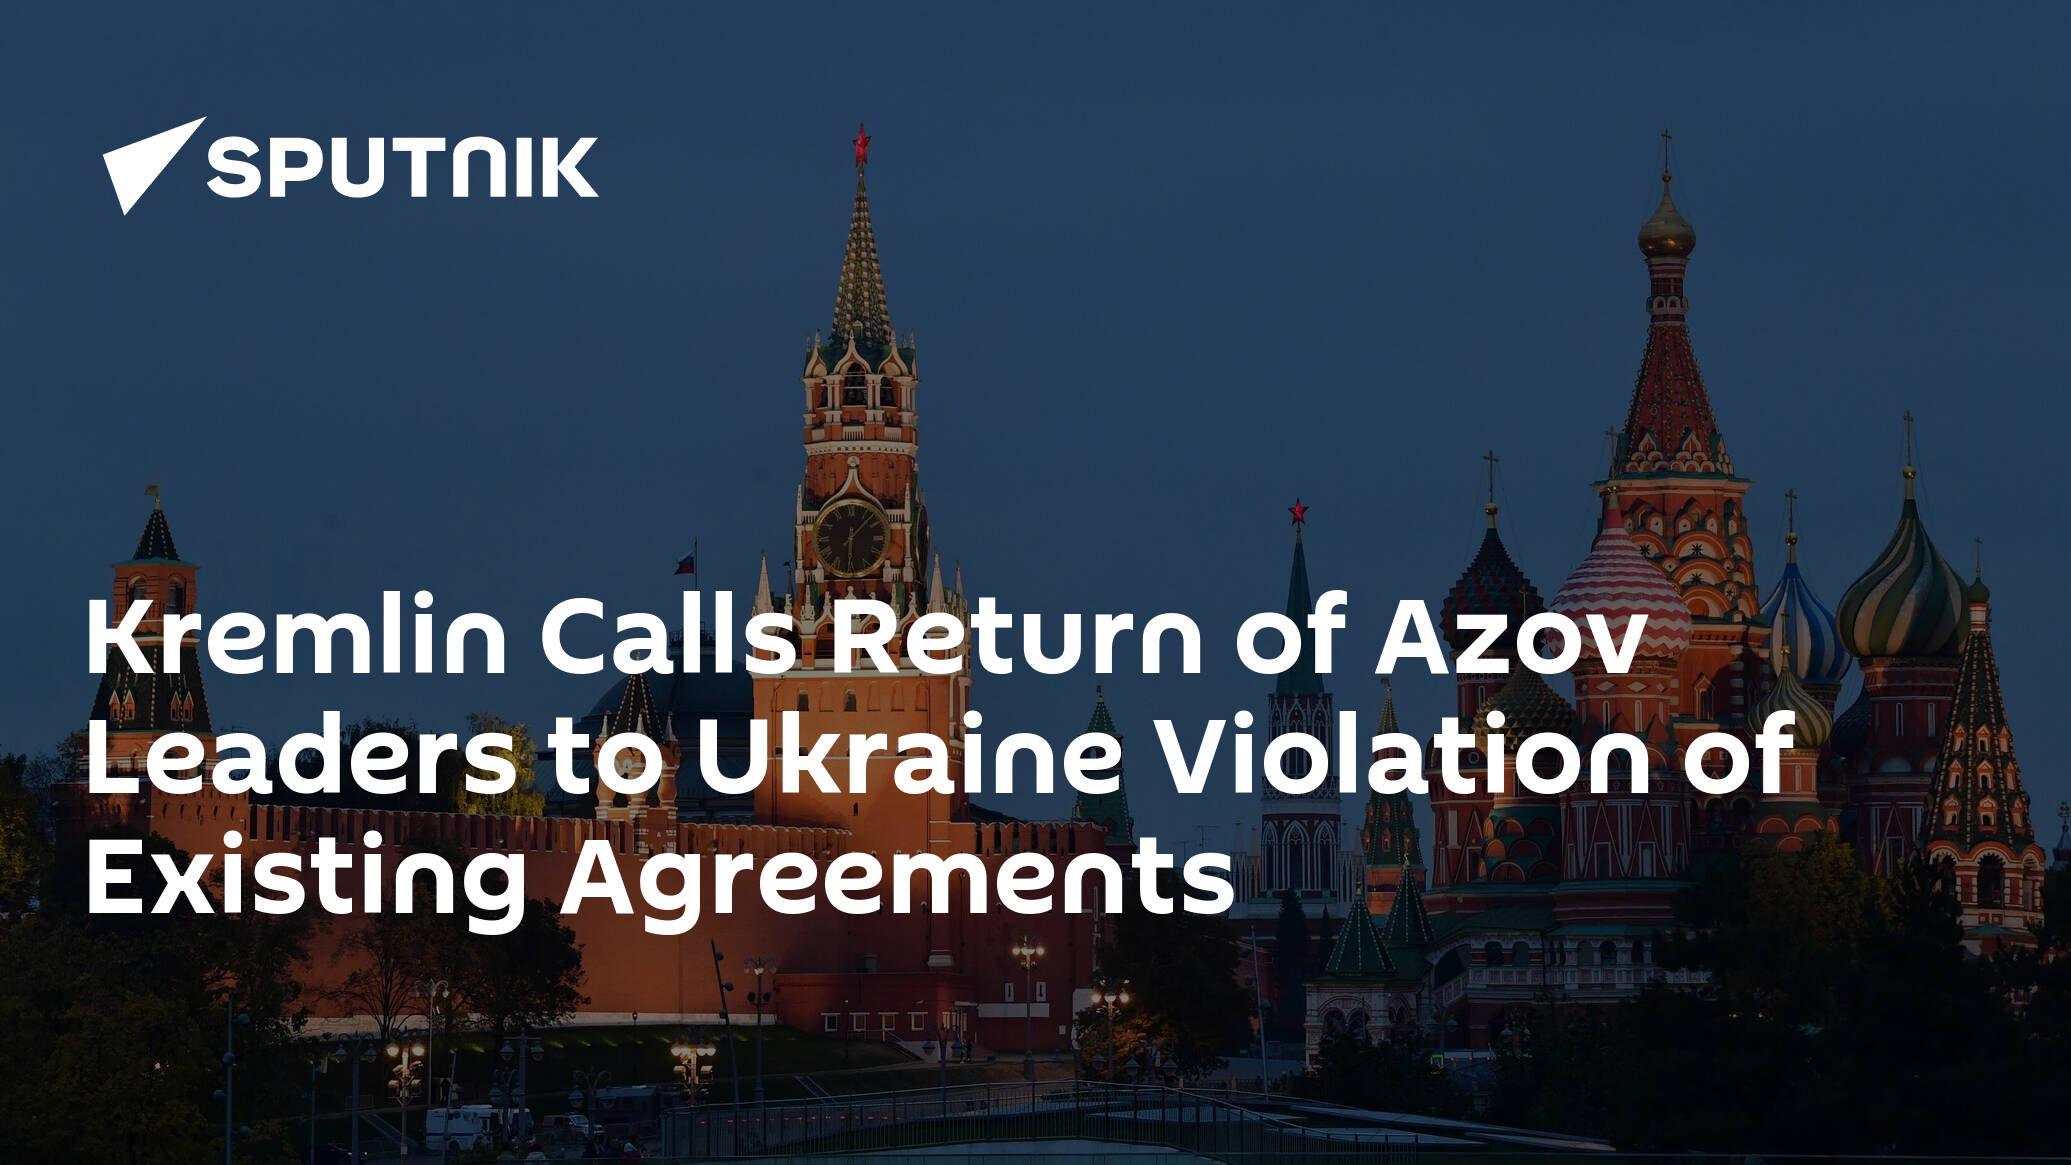 Kremlin Calls Return of Azov Leaders to Ukraine Violation of Existing Agreements